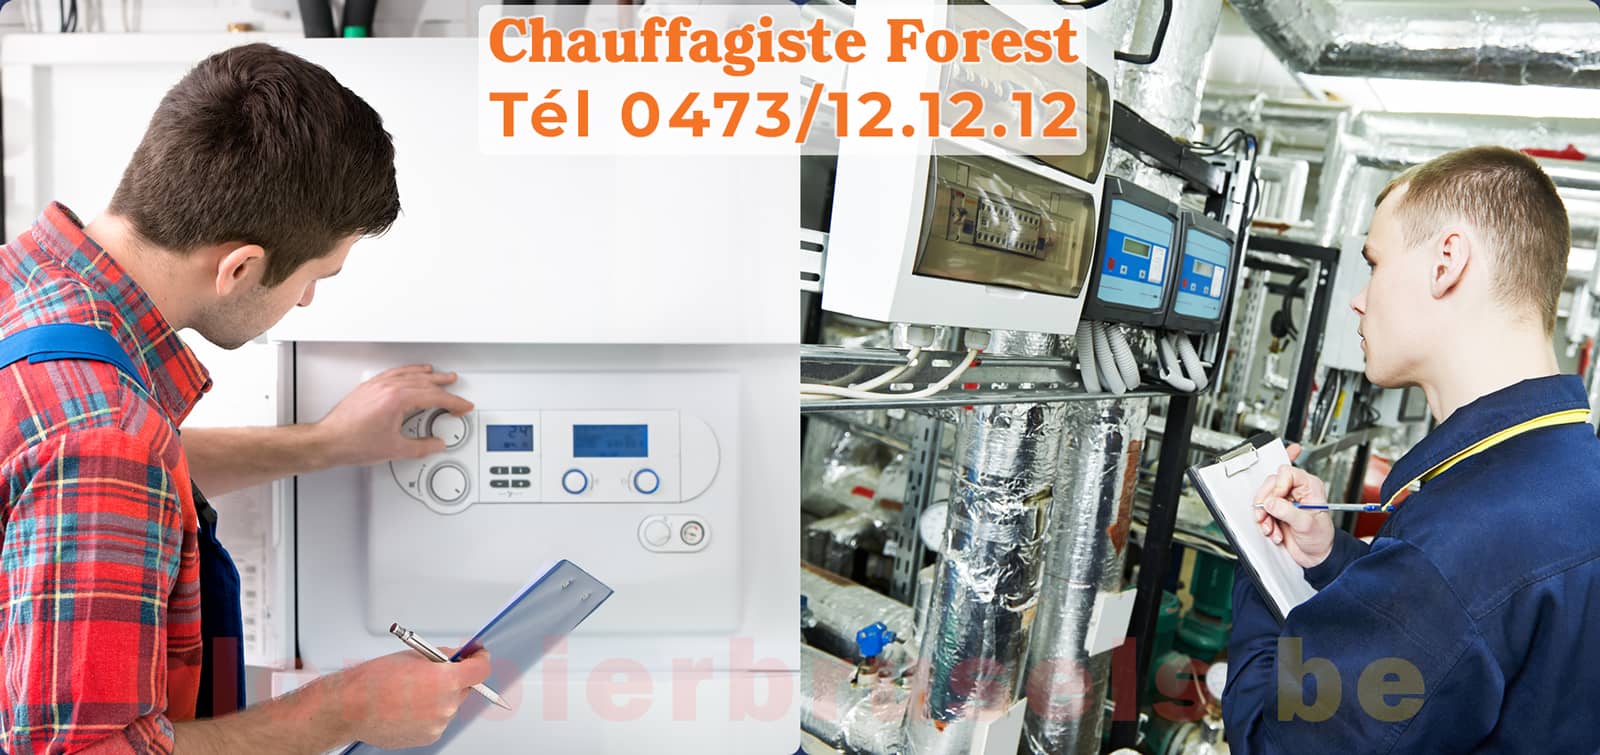 Chauffagiste Forest service de Chauffage tél 0473/12.12.12